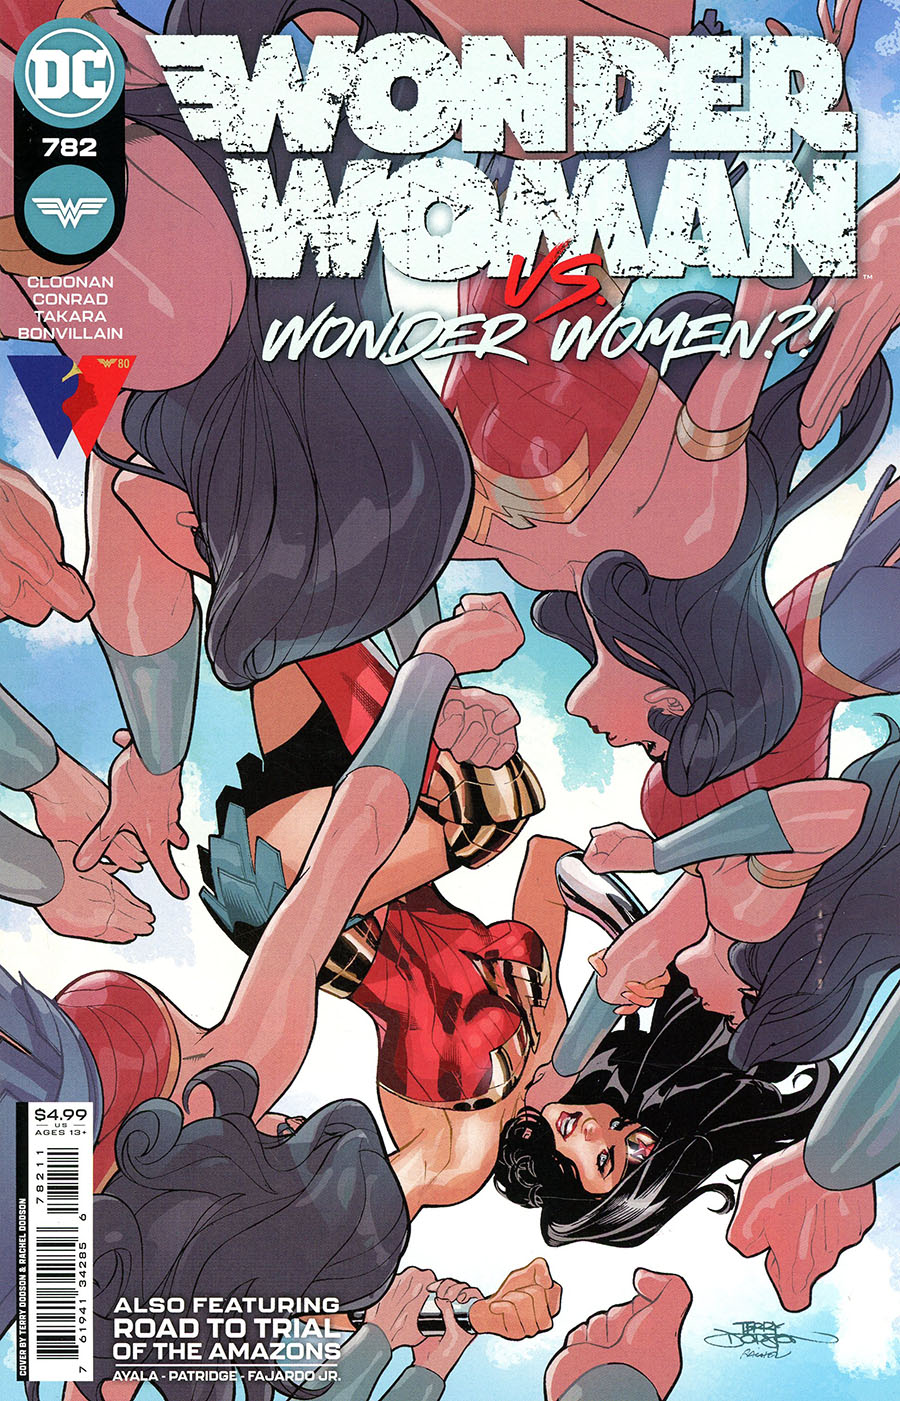 Wonder Woman Vol 5 #782 Cover A Regular Terry Dodson & Rachel Dodson Cover